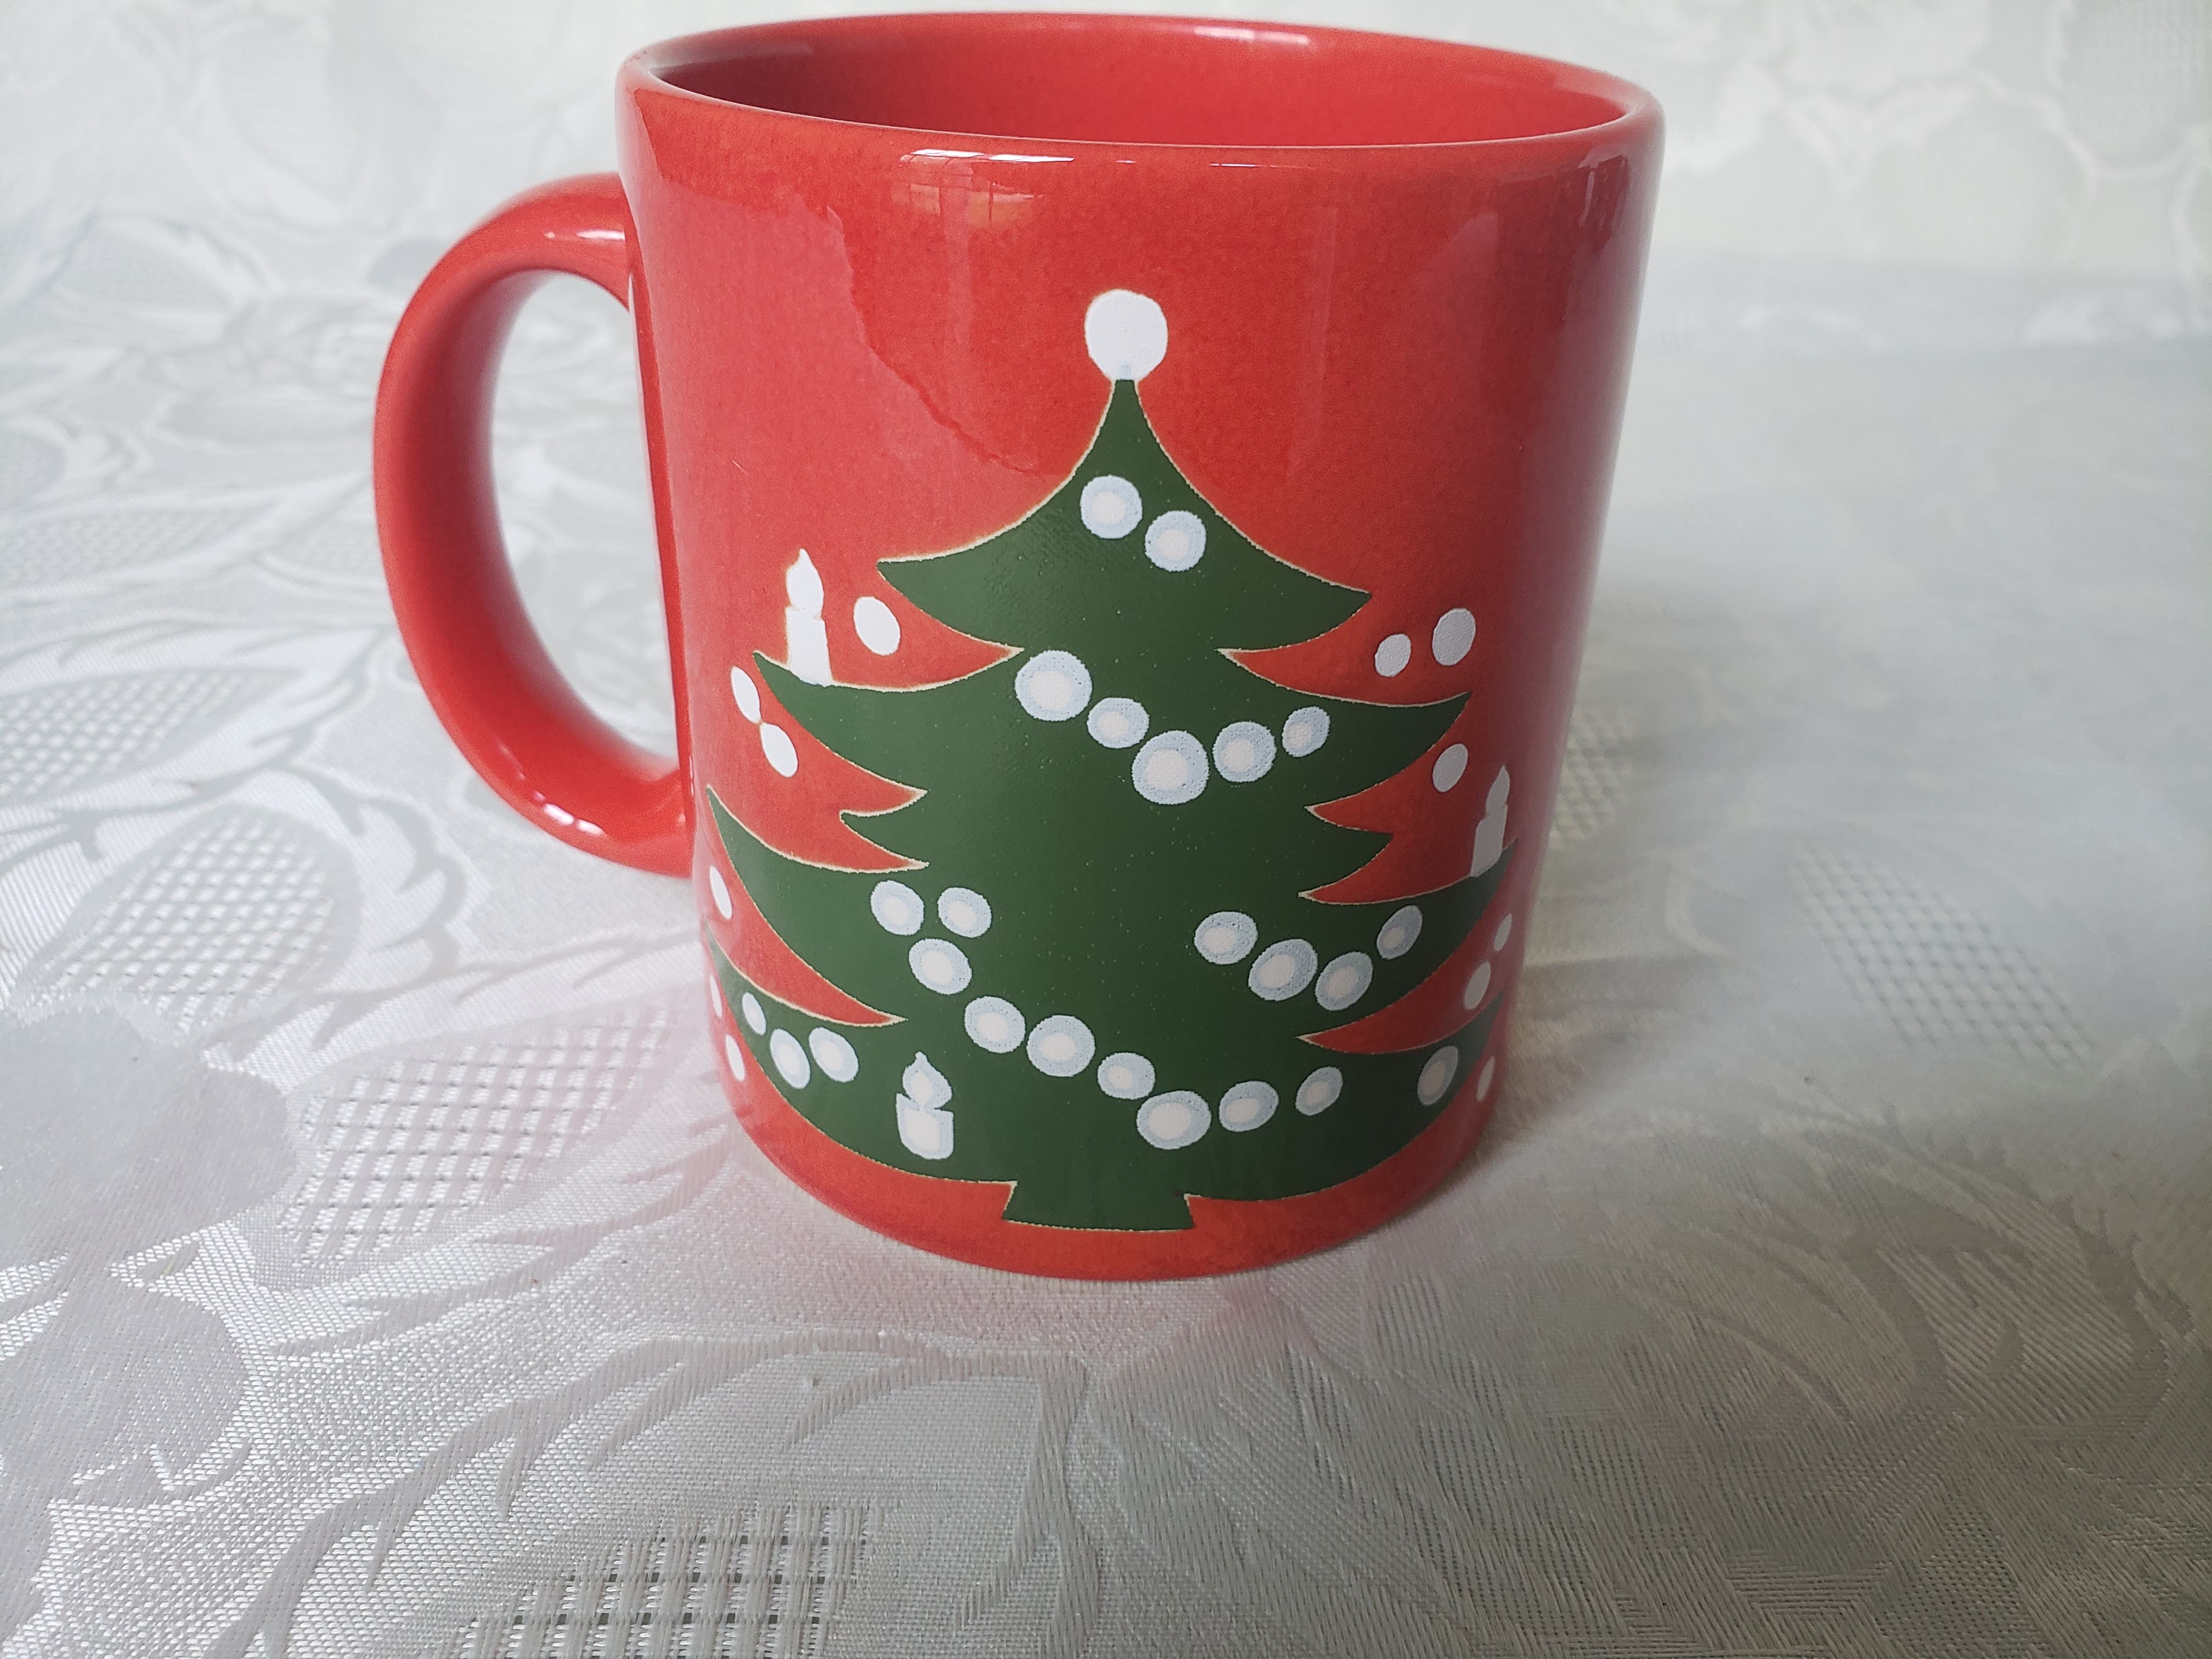 https://serstyle.com/wp-content/uploads/2018/09/red-christmas-tree-mug-.jpg